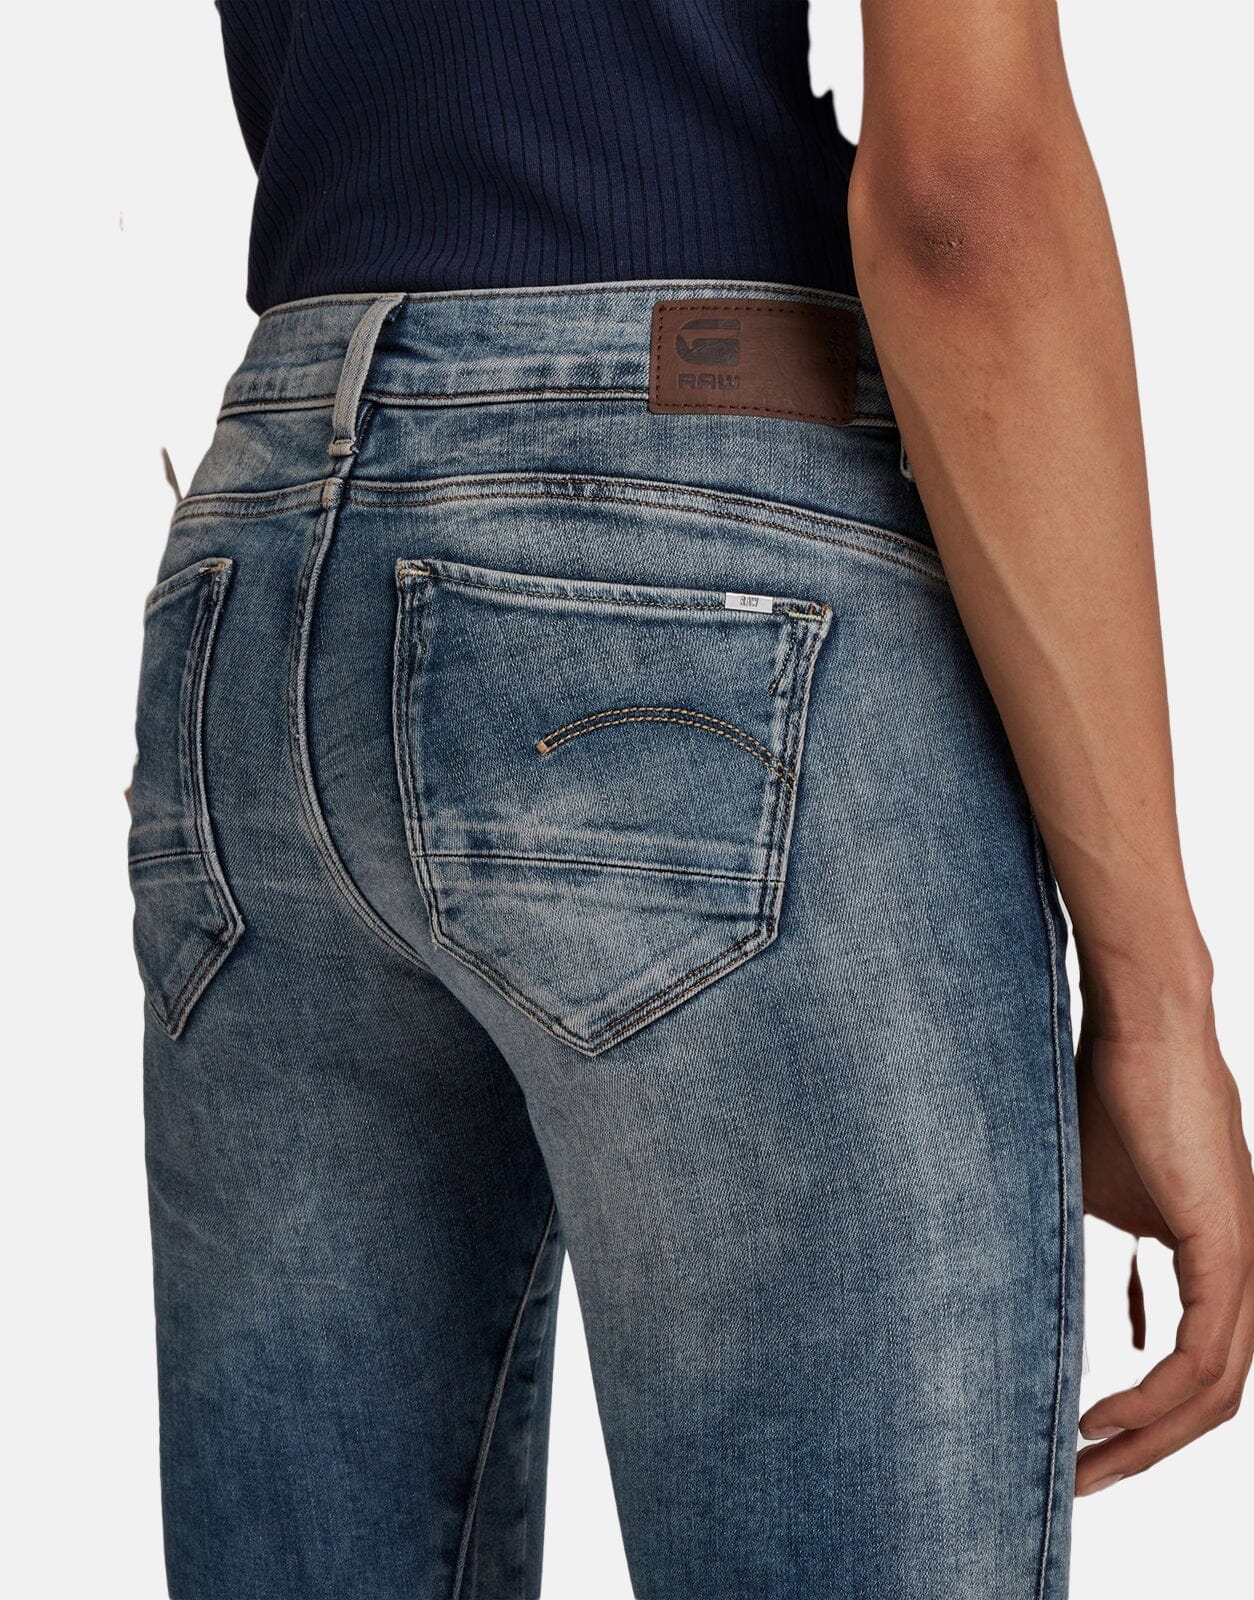 G-Star RAW Arc 3D Skinny Jeans - Subwear